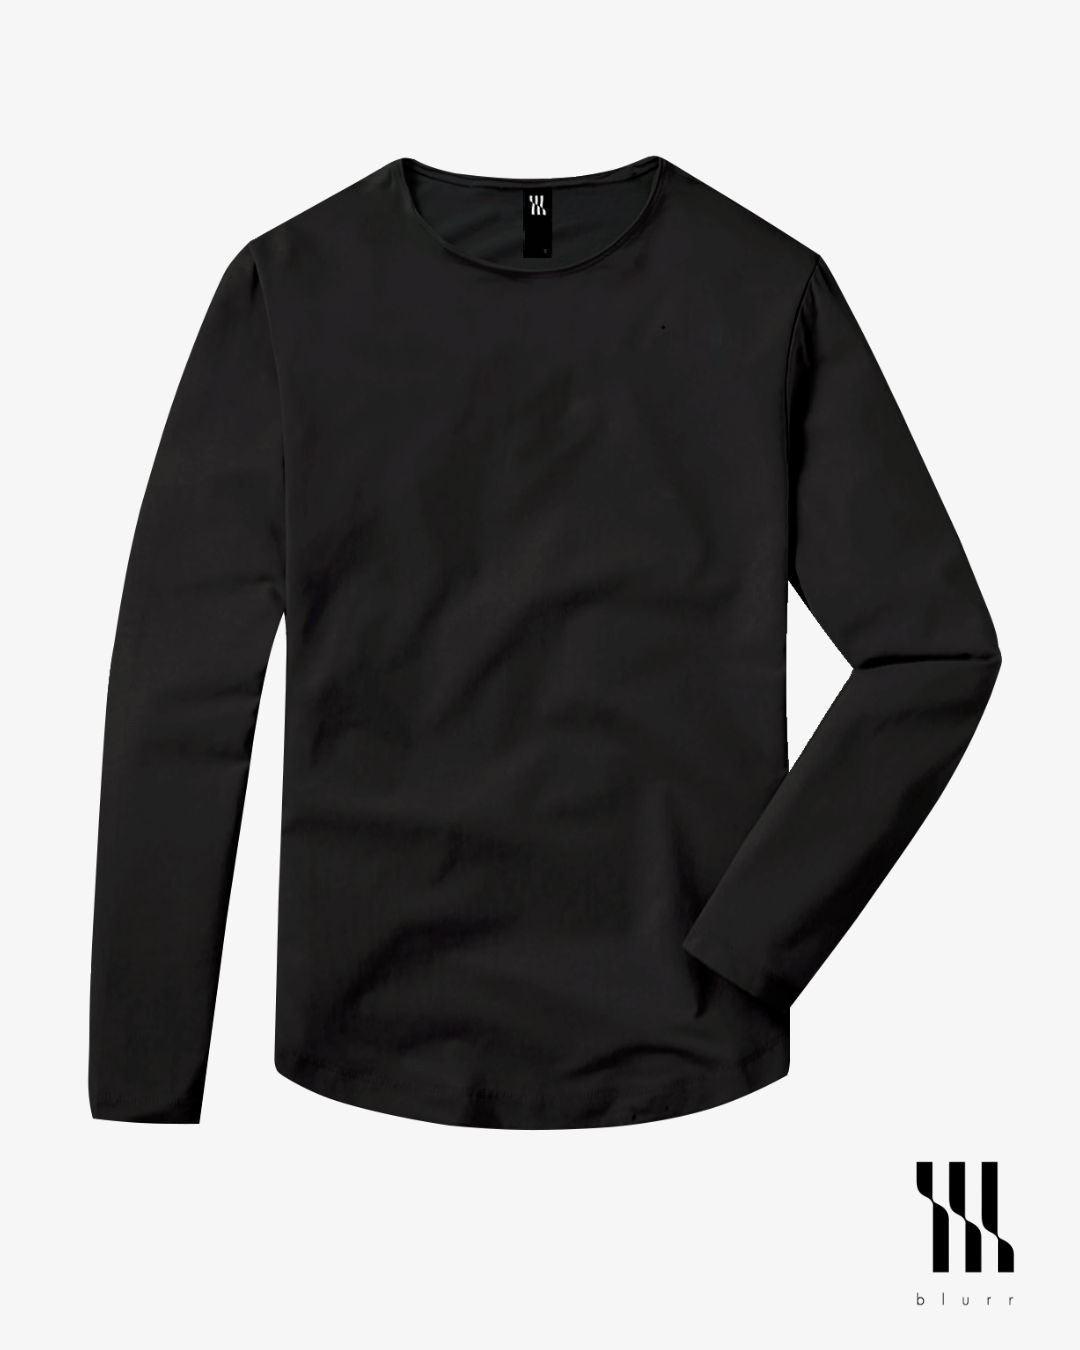 New Text All Black T-shirt - Long Sleeve